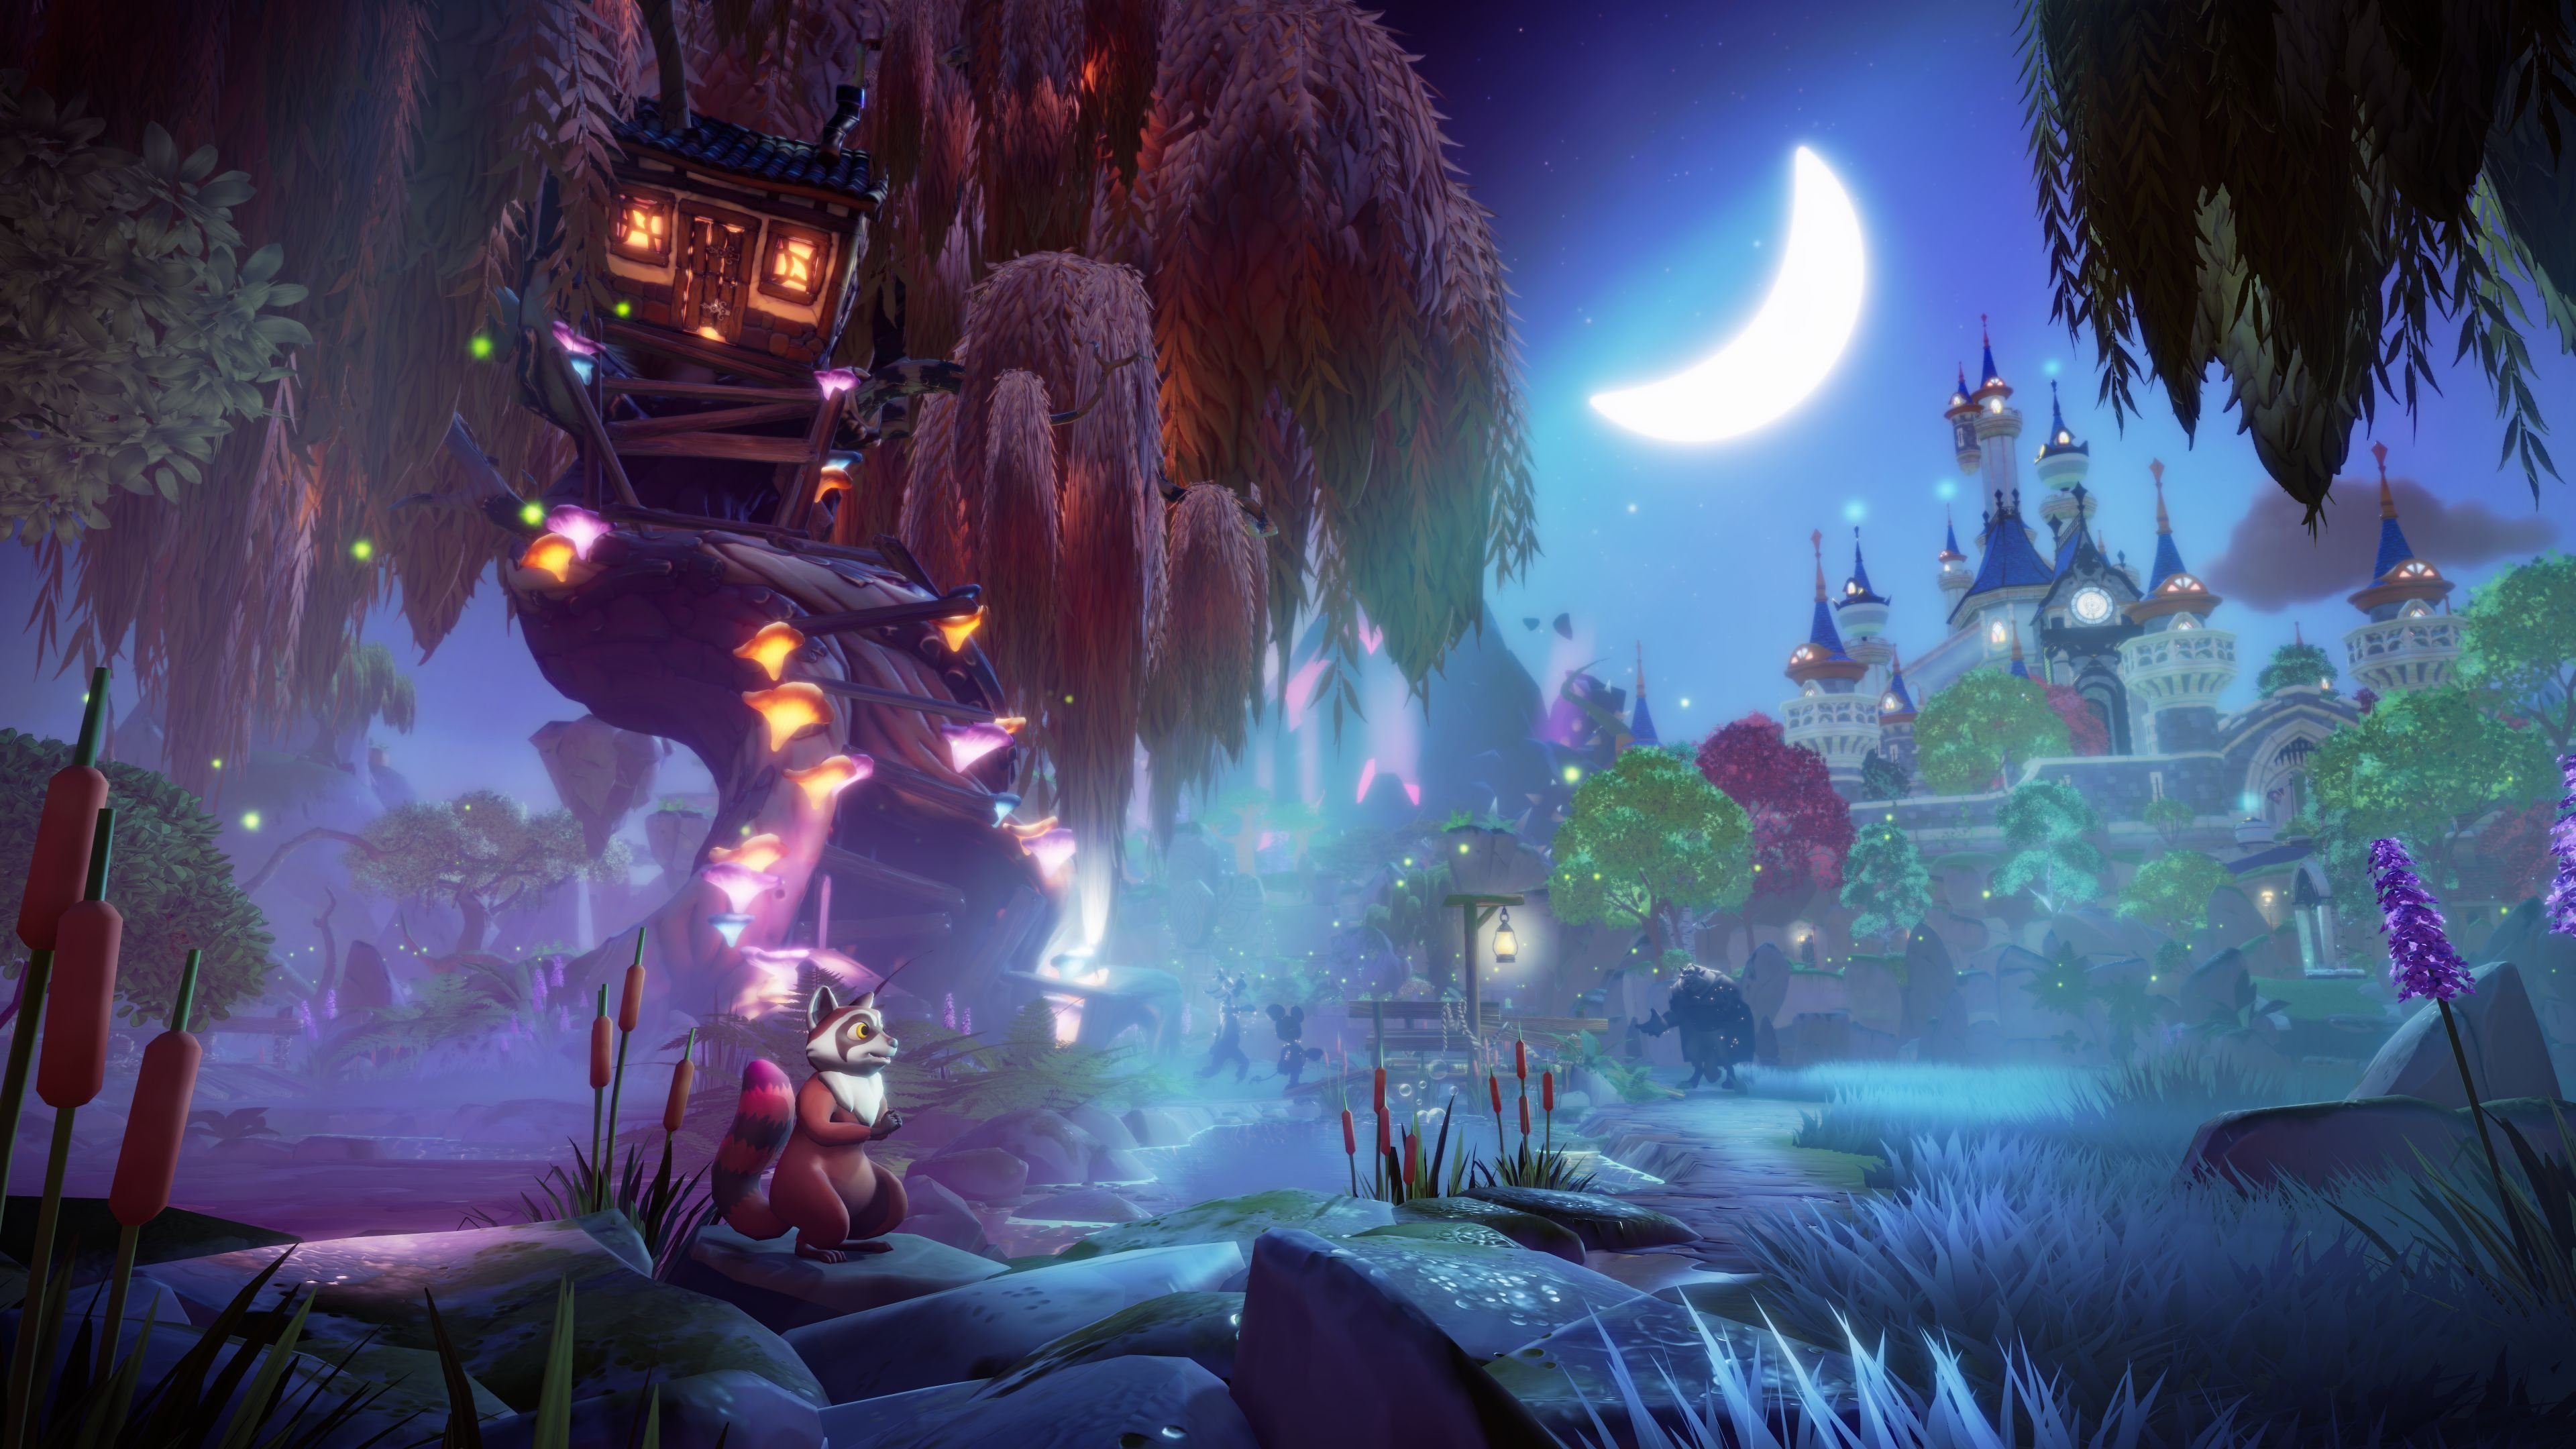 4 Nighthawk Valley: Edition Cozy Dreamlight PlayStation Disney